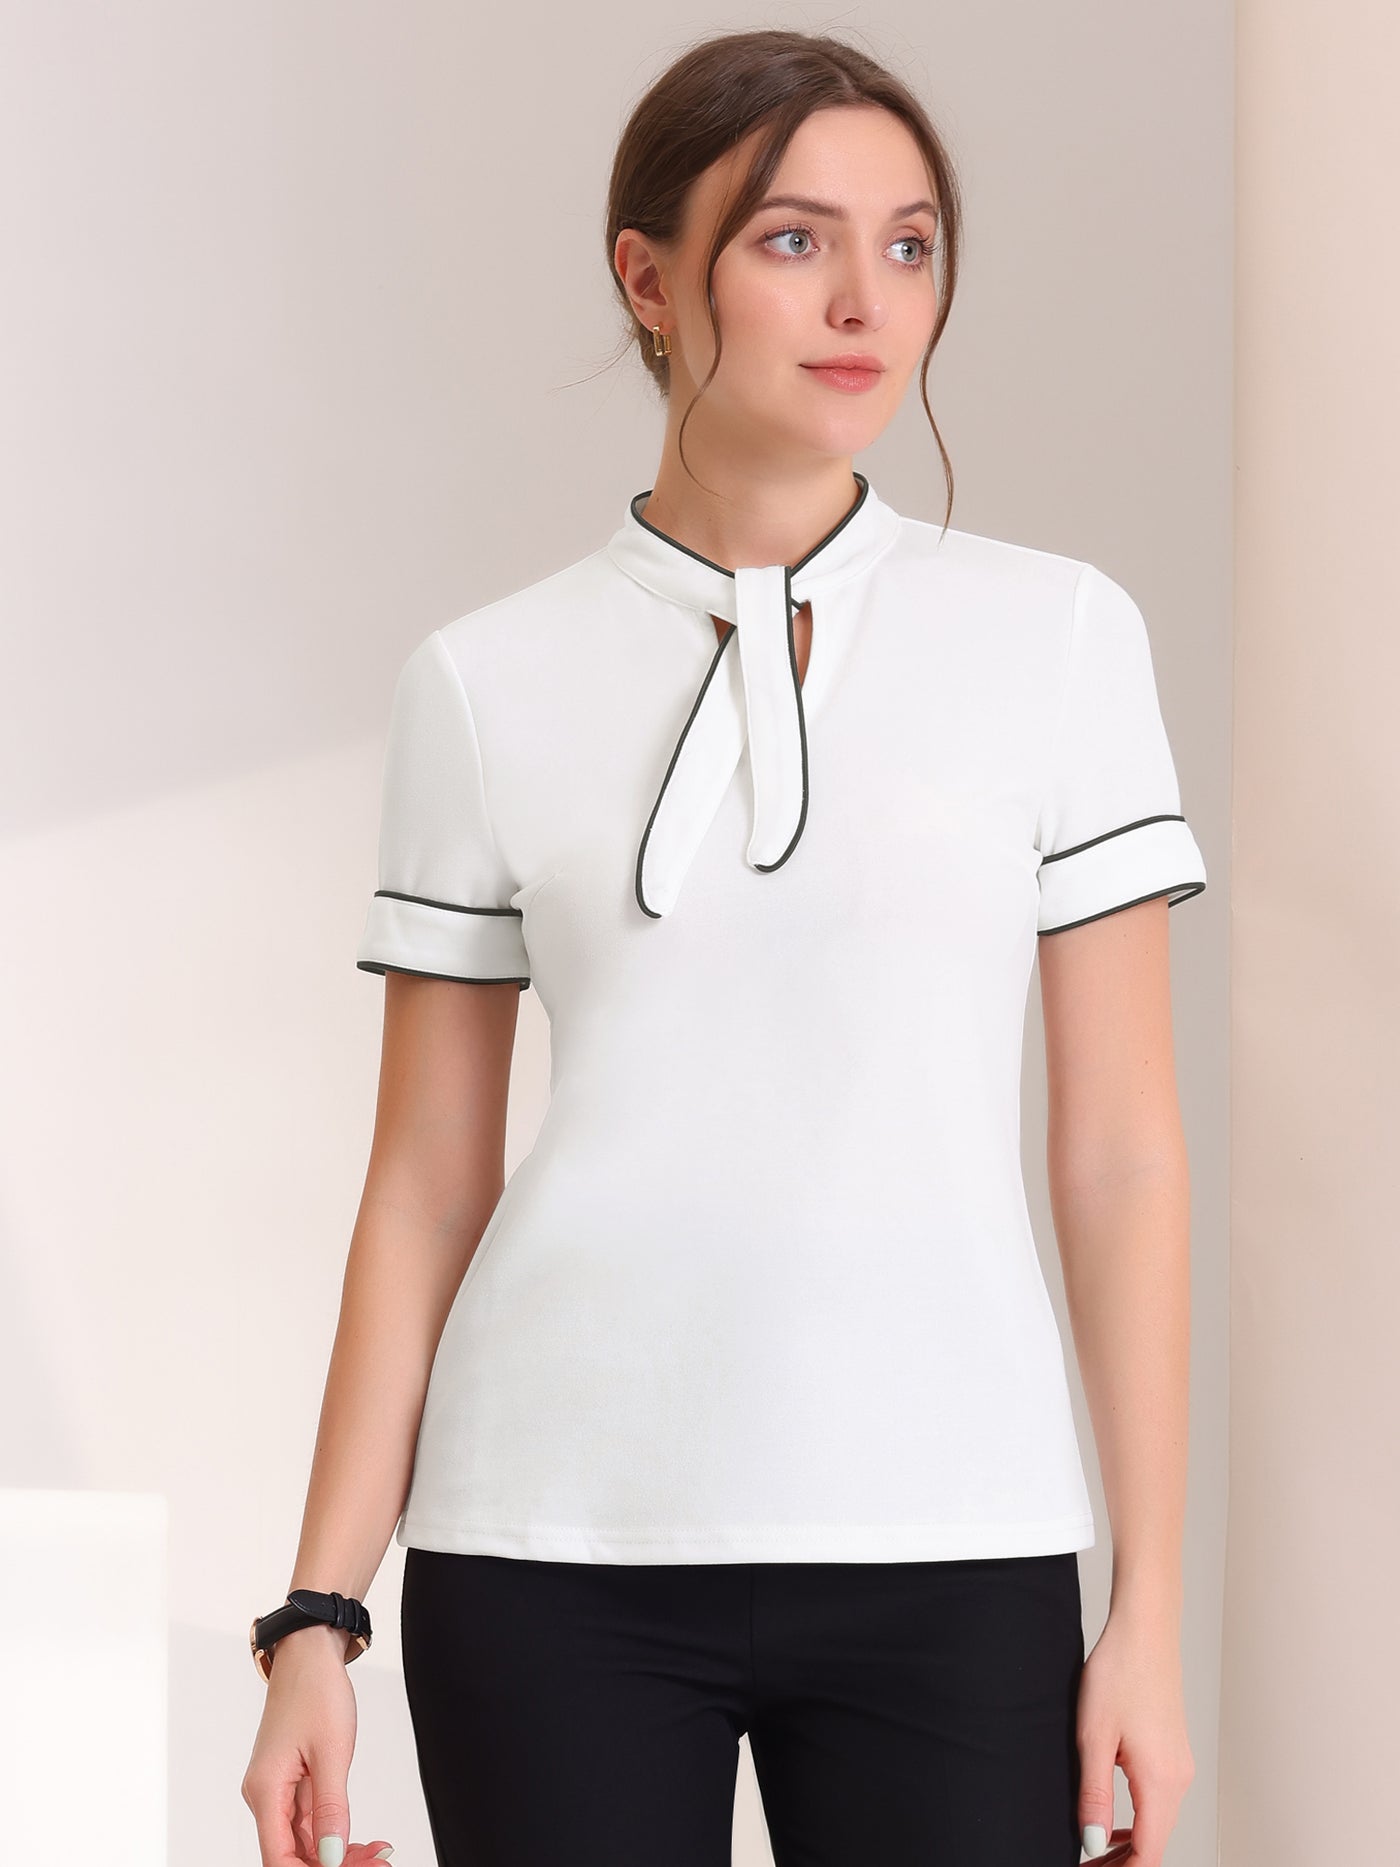 Allegra K Office Blouse Short Sleeve Cutout Contrast Binding Tie Work Tops